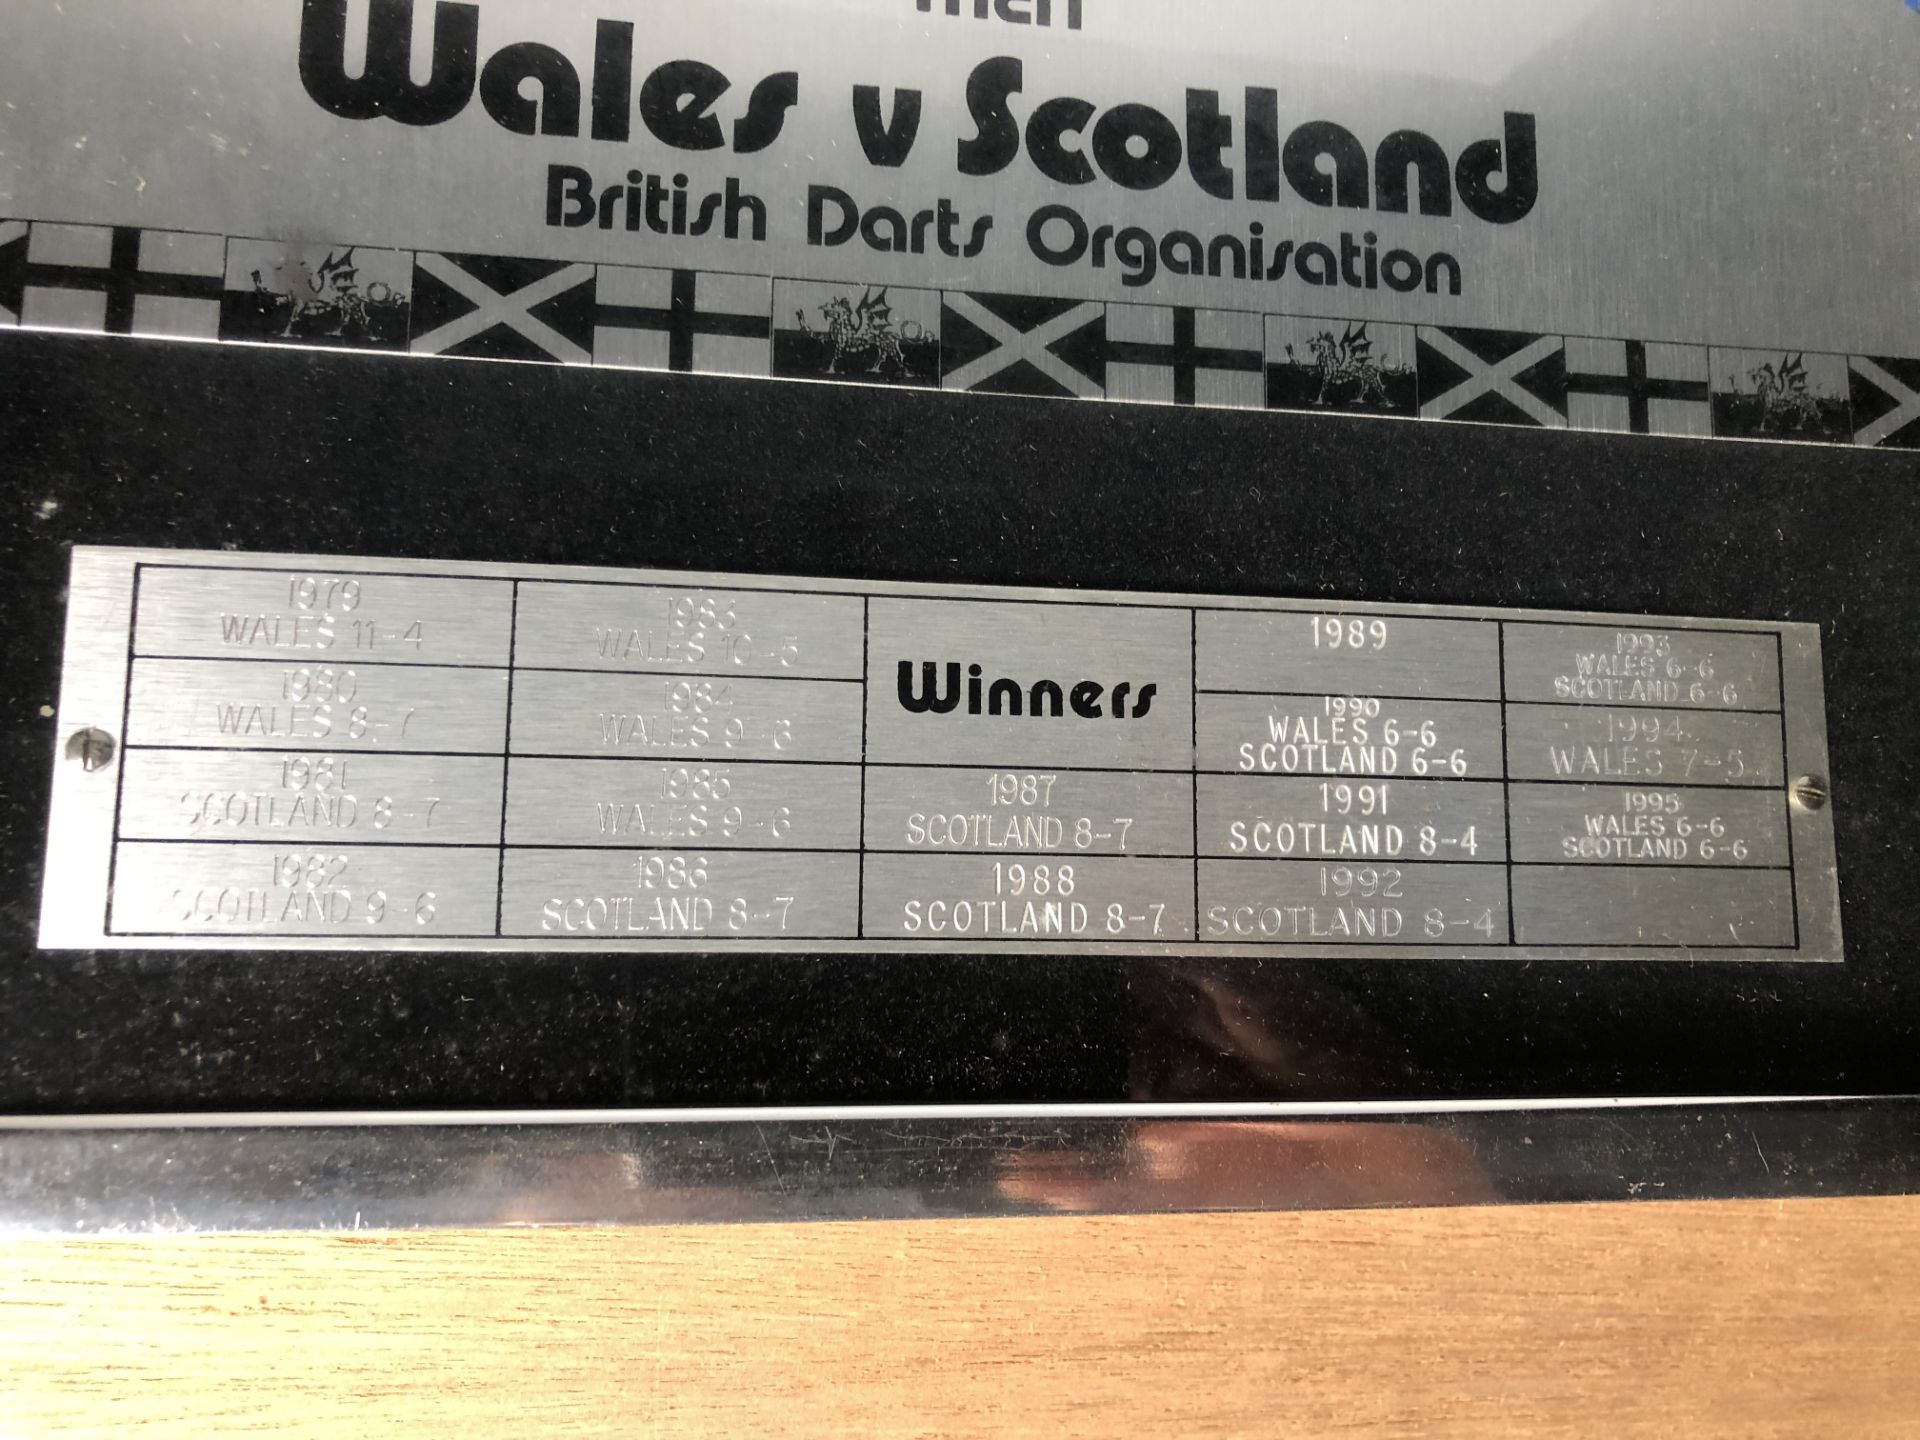 The British International Darts Women's Championship Framed Plaque - Wales vs Scotland - Image 2 of 3